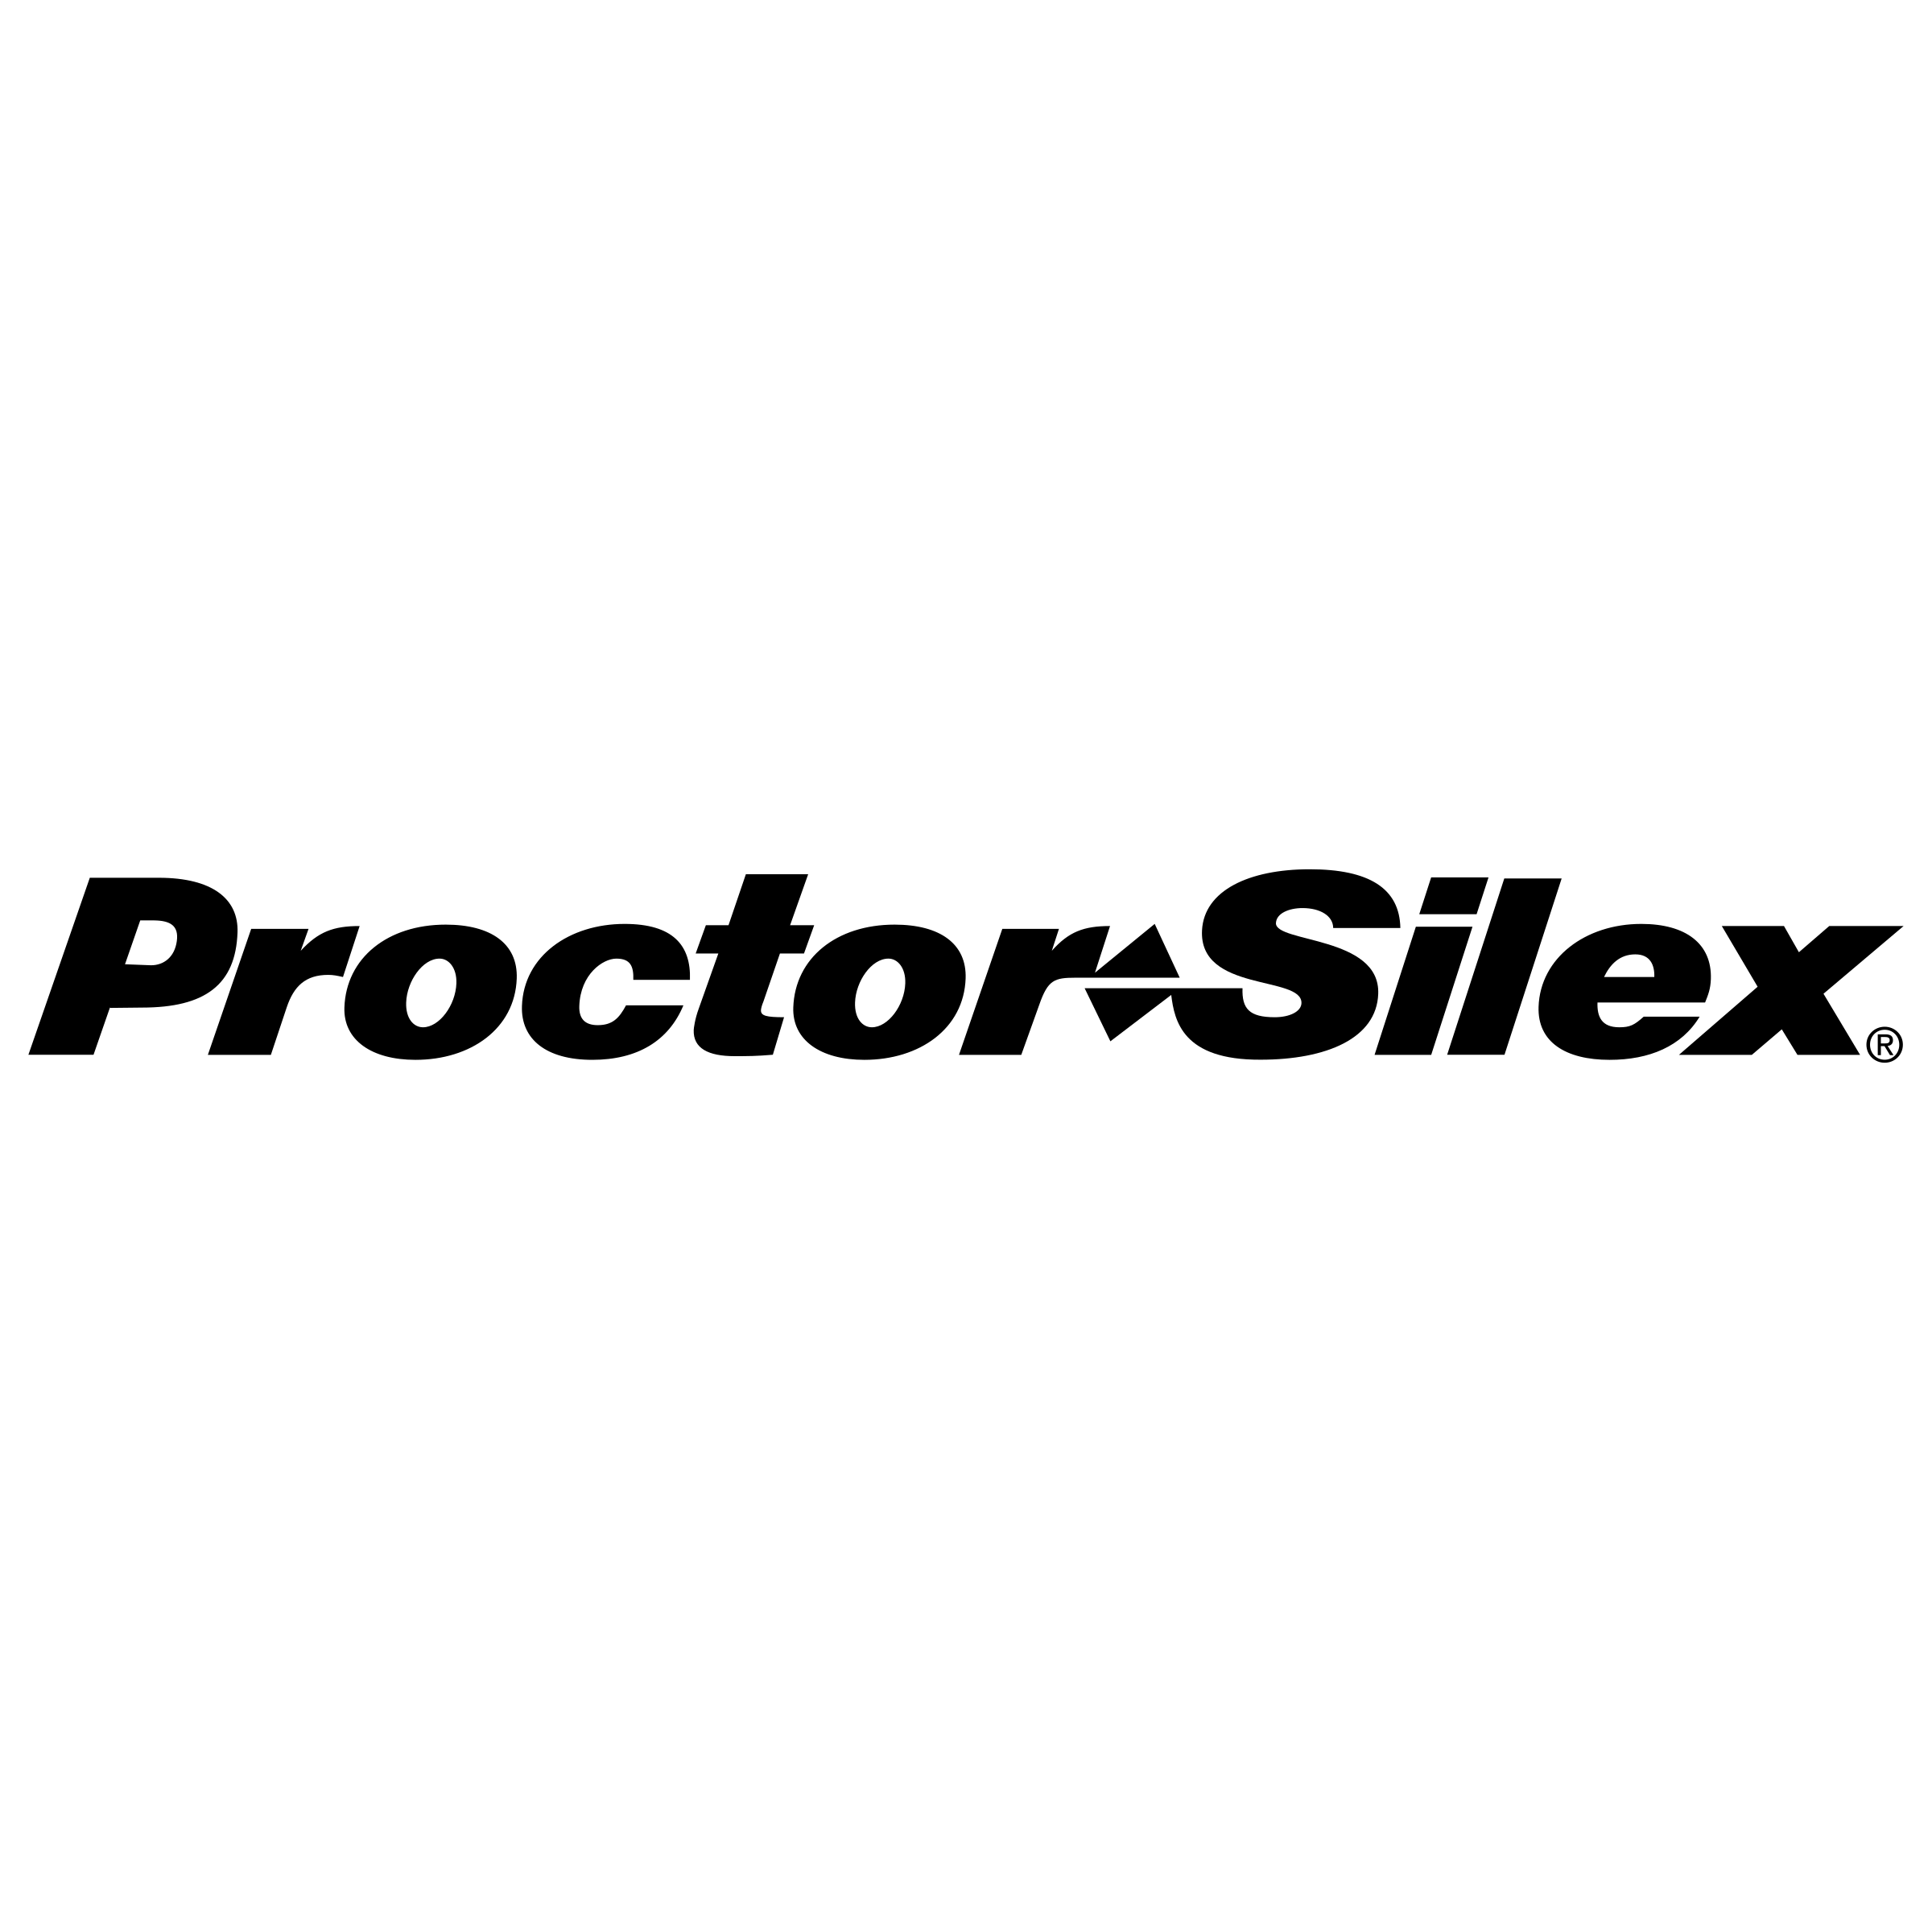 Proctor Logo - Proctor Silex Logo PNG Transparent & SVG Vector - Freebie Supply